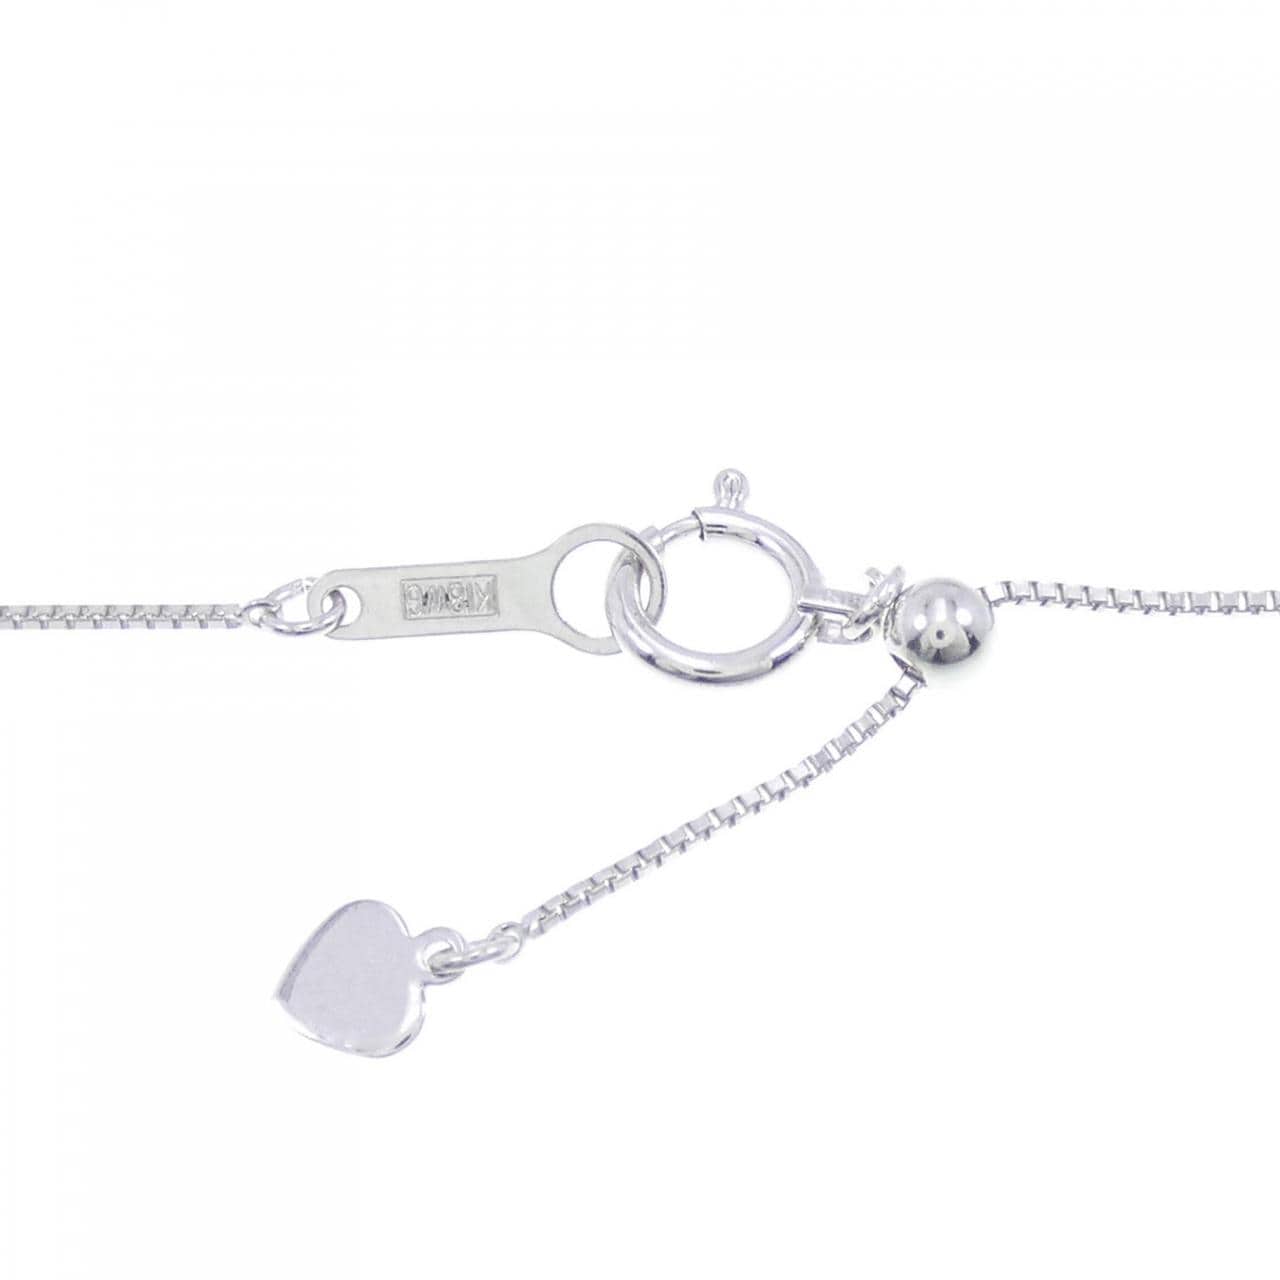 K18WG Garnet necklace 1.63CT